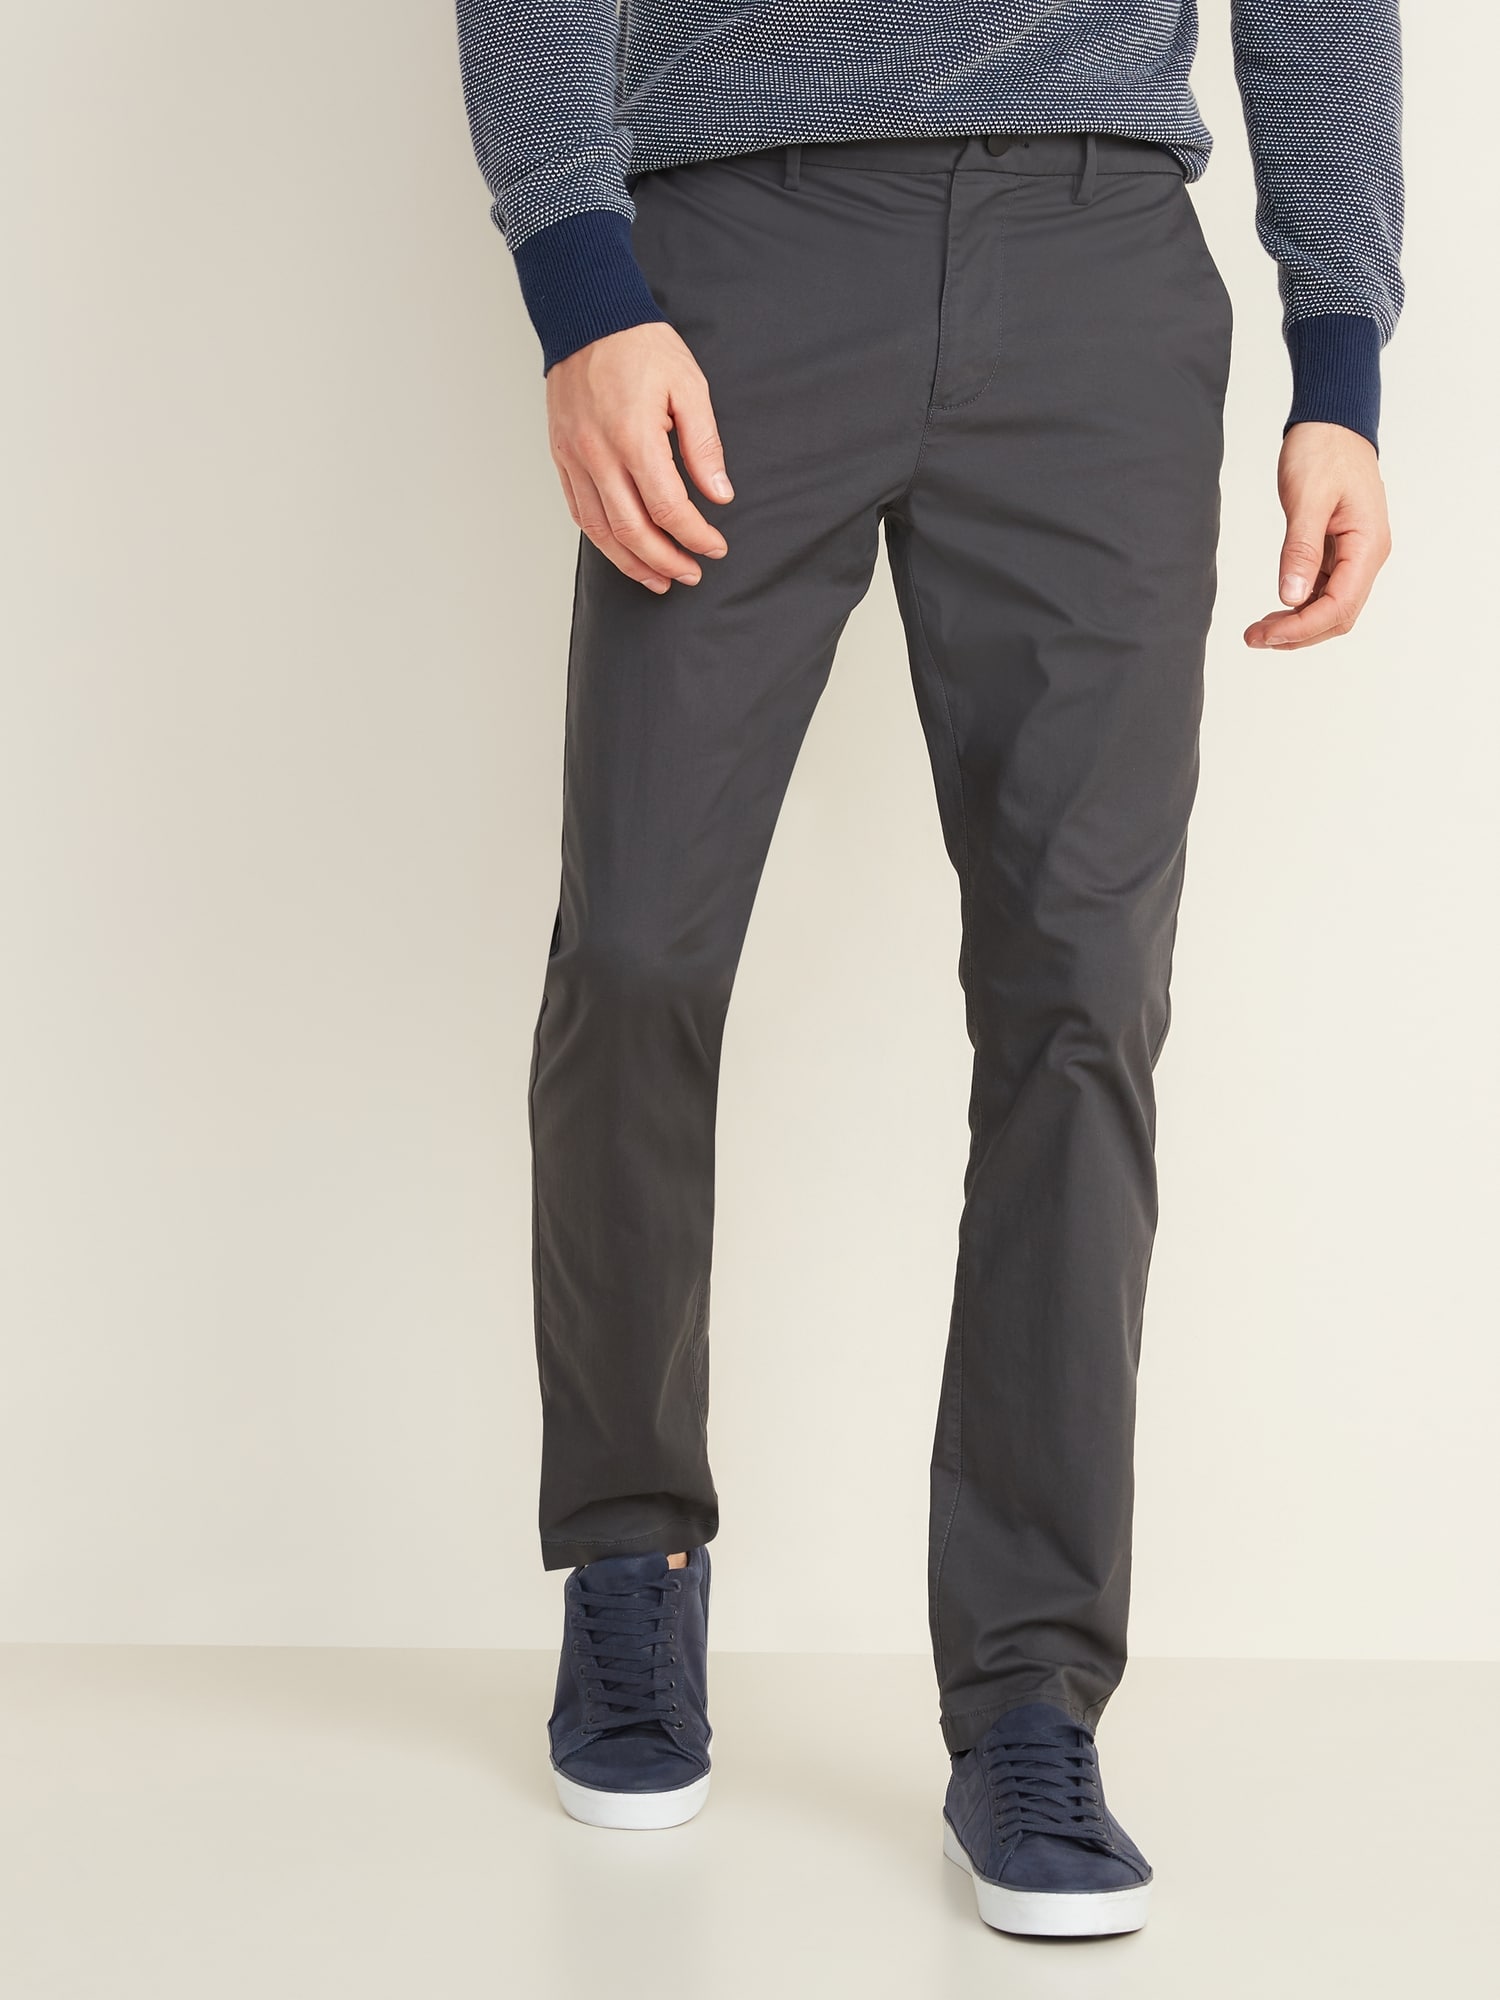 Buy Men Navy Textured Slim Fit Trousers Online - 746861